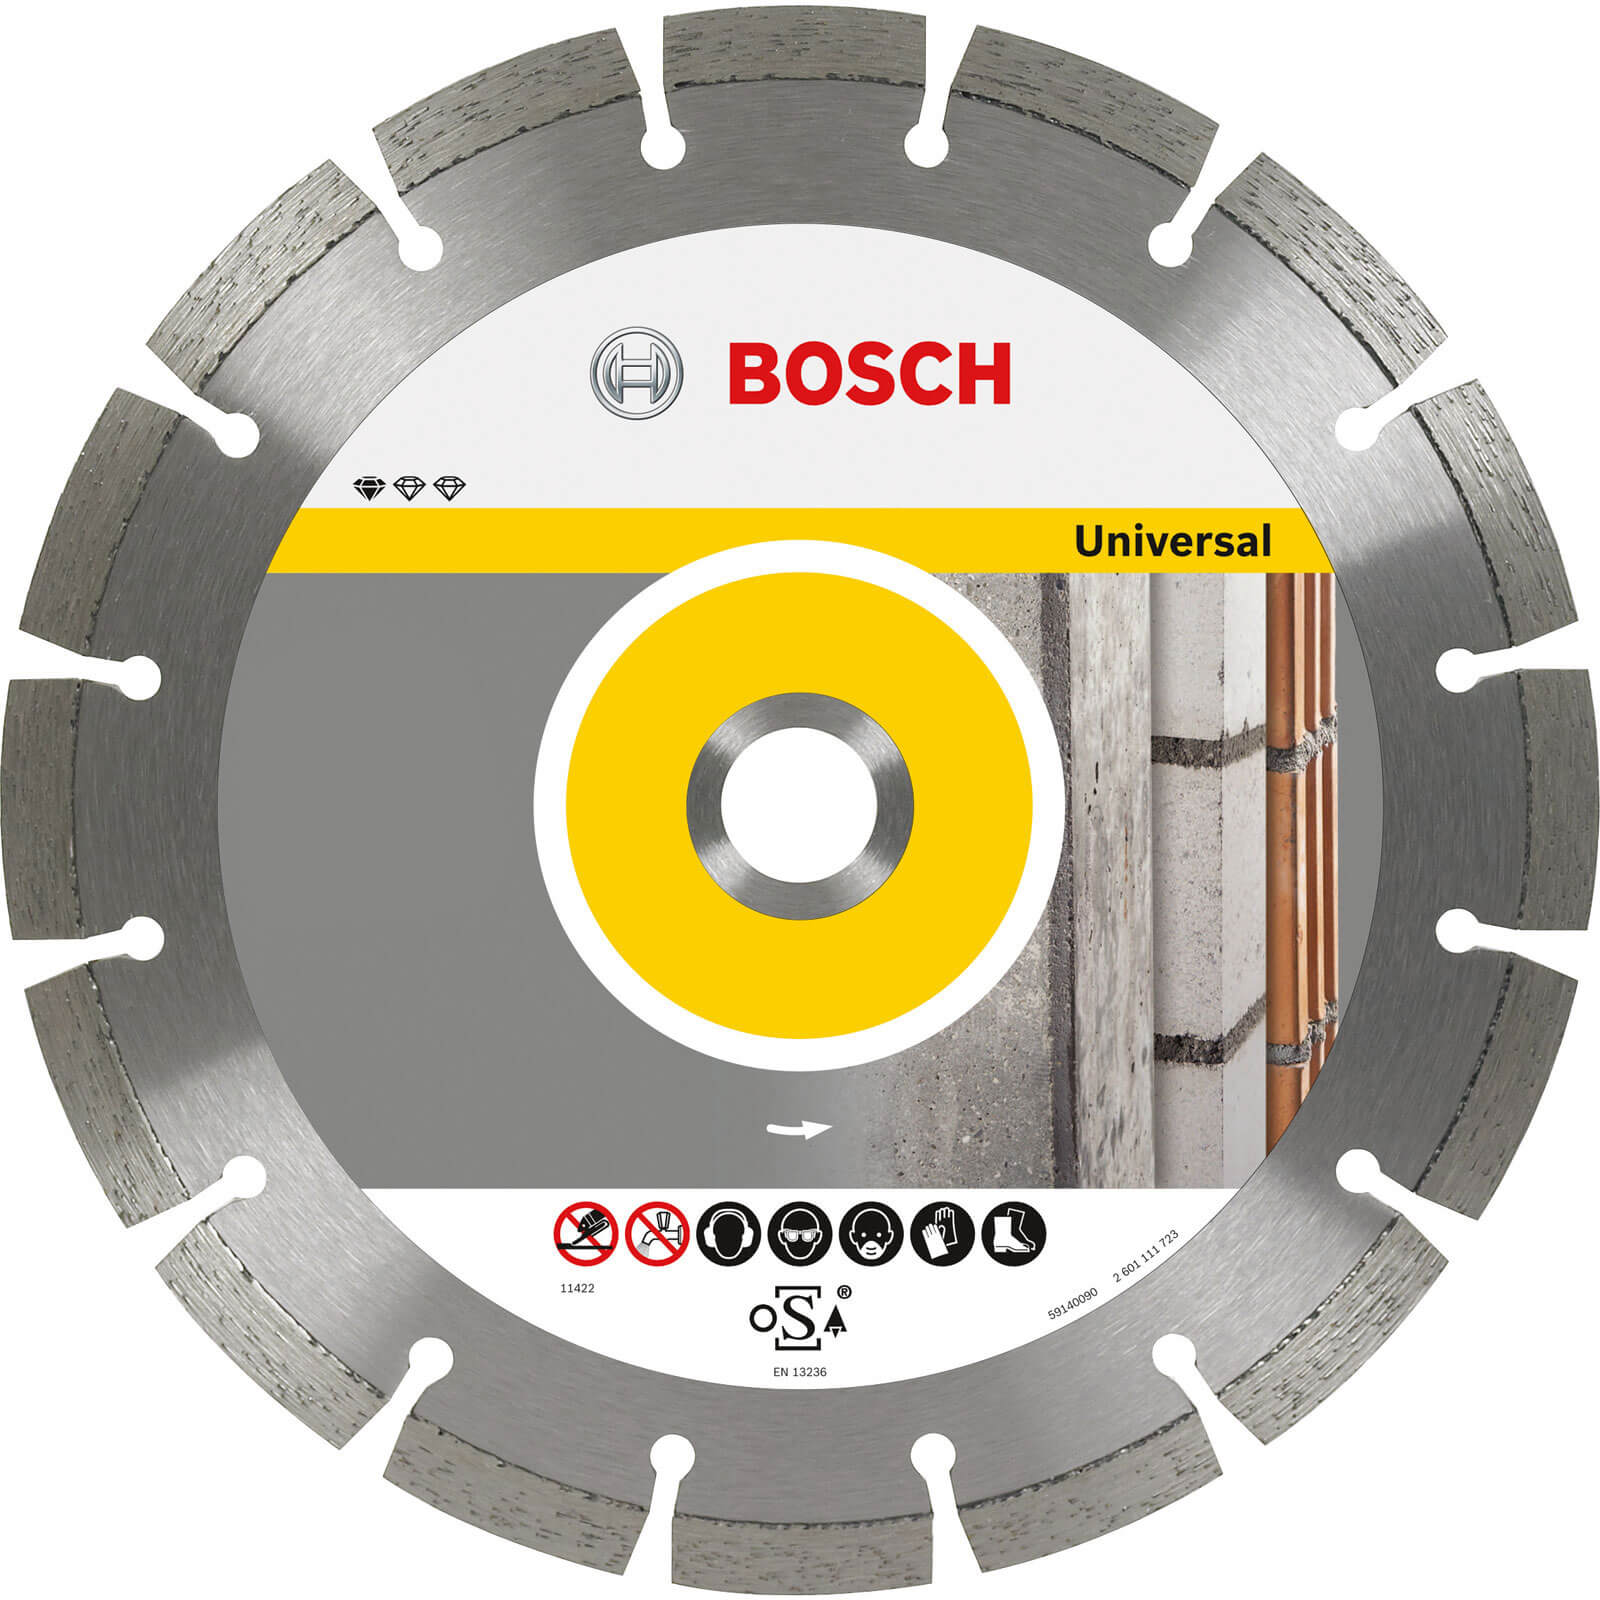 Bosch 300mm Universal Diamond Blade Cutting Disc